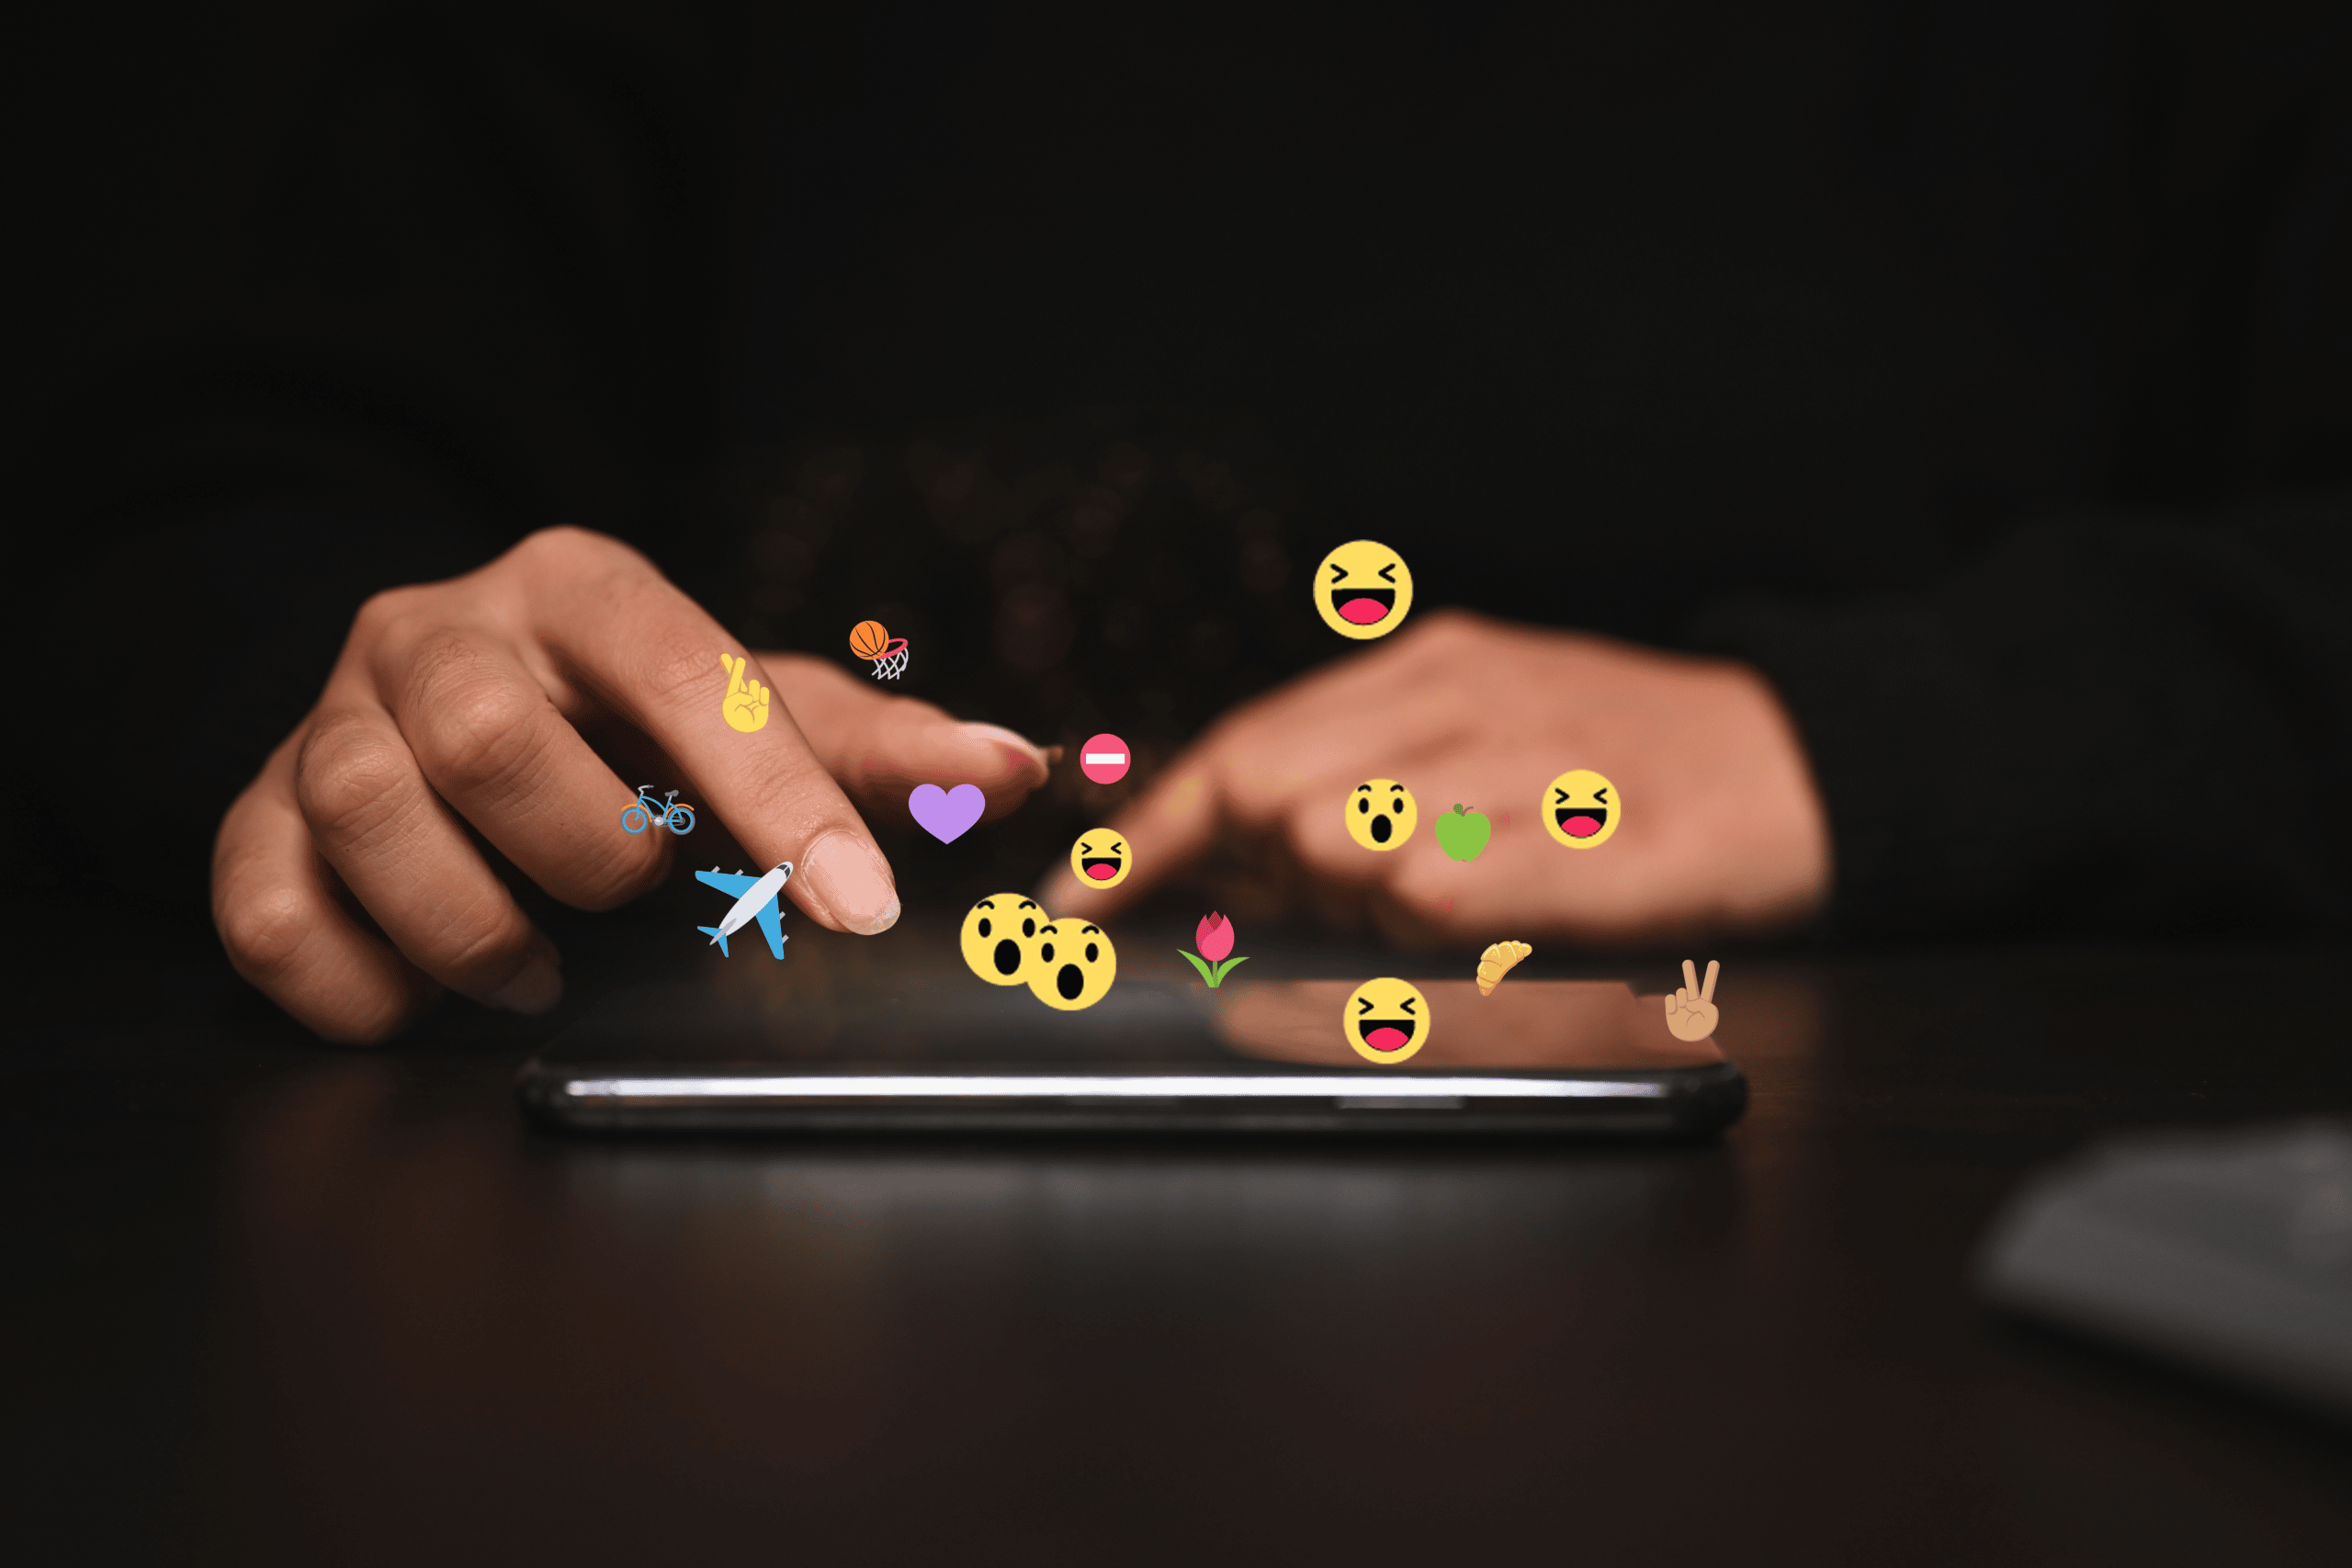 Phone with emojis